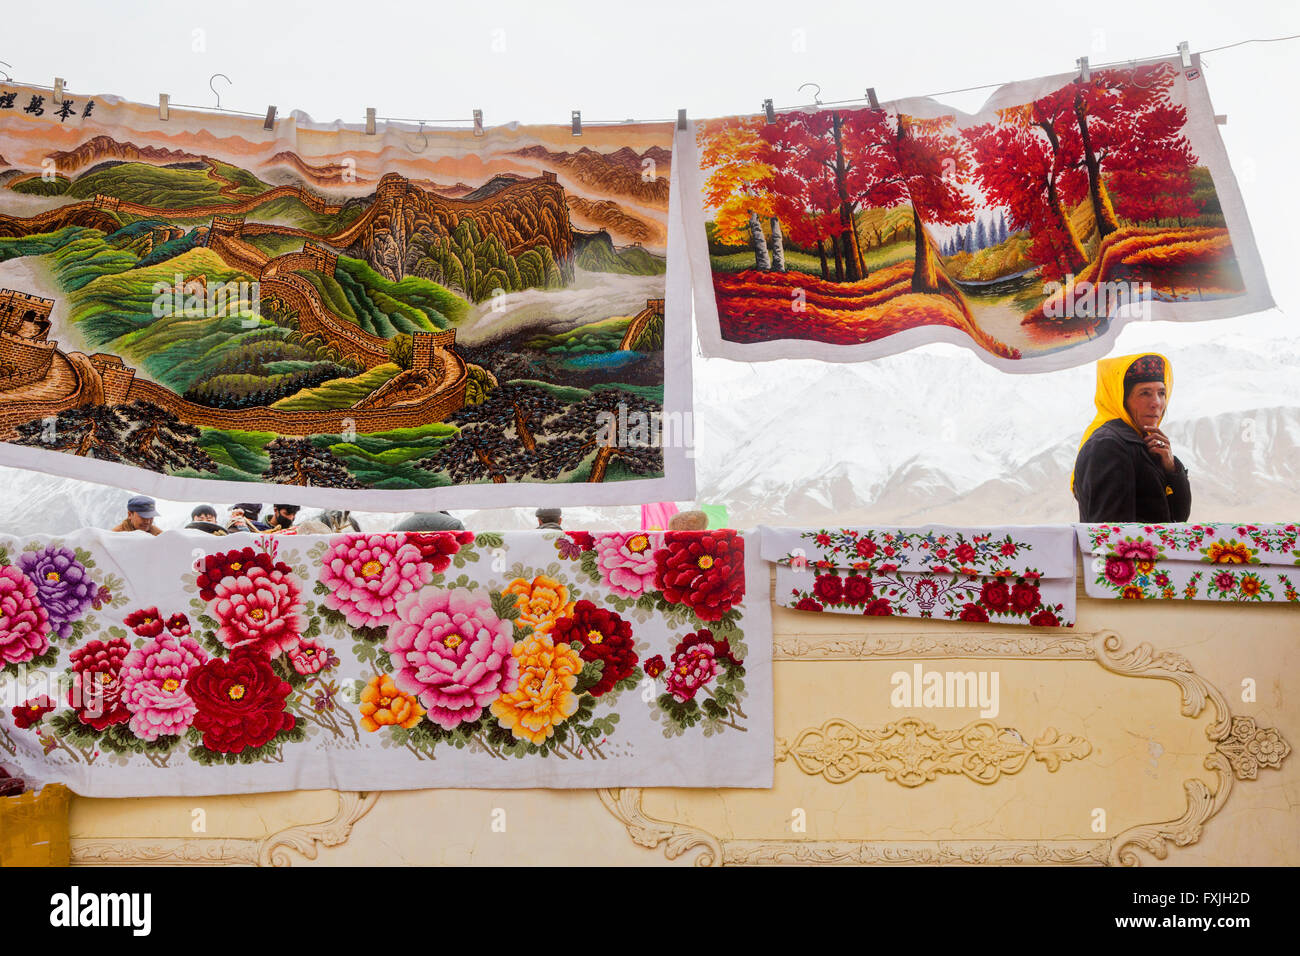 View of souvenirs market during celebration Nowruz holiday near Tashkurgan town Tajik Autonomous County, Xinjiang, China Stock Photo